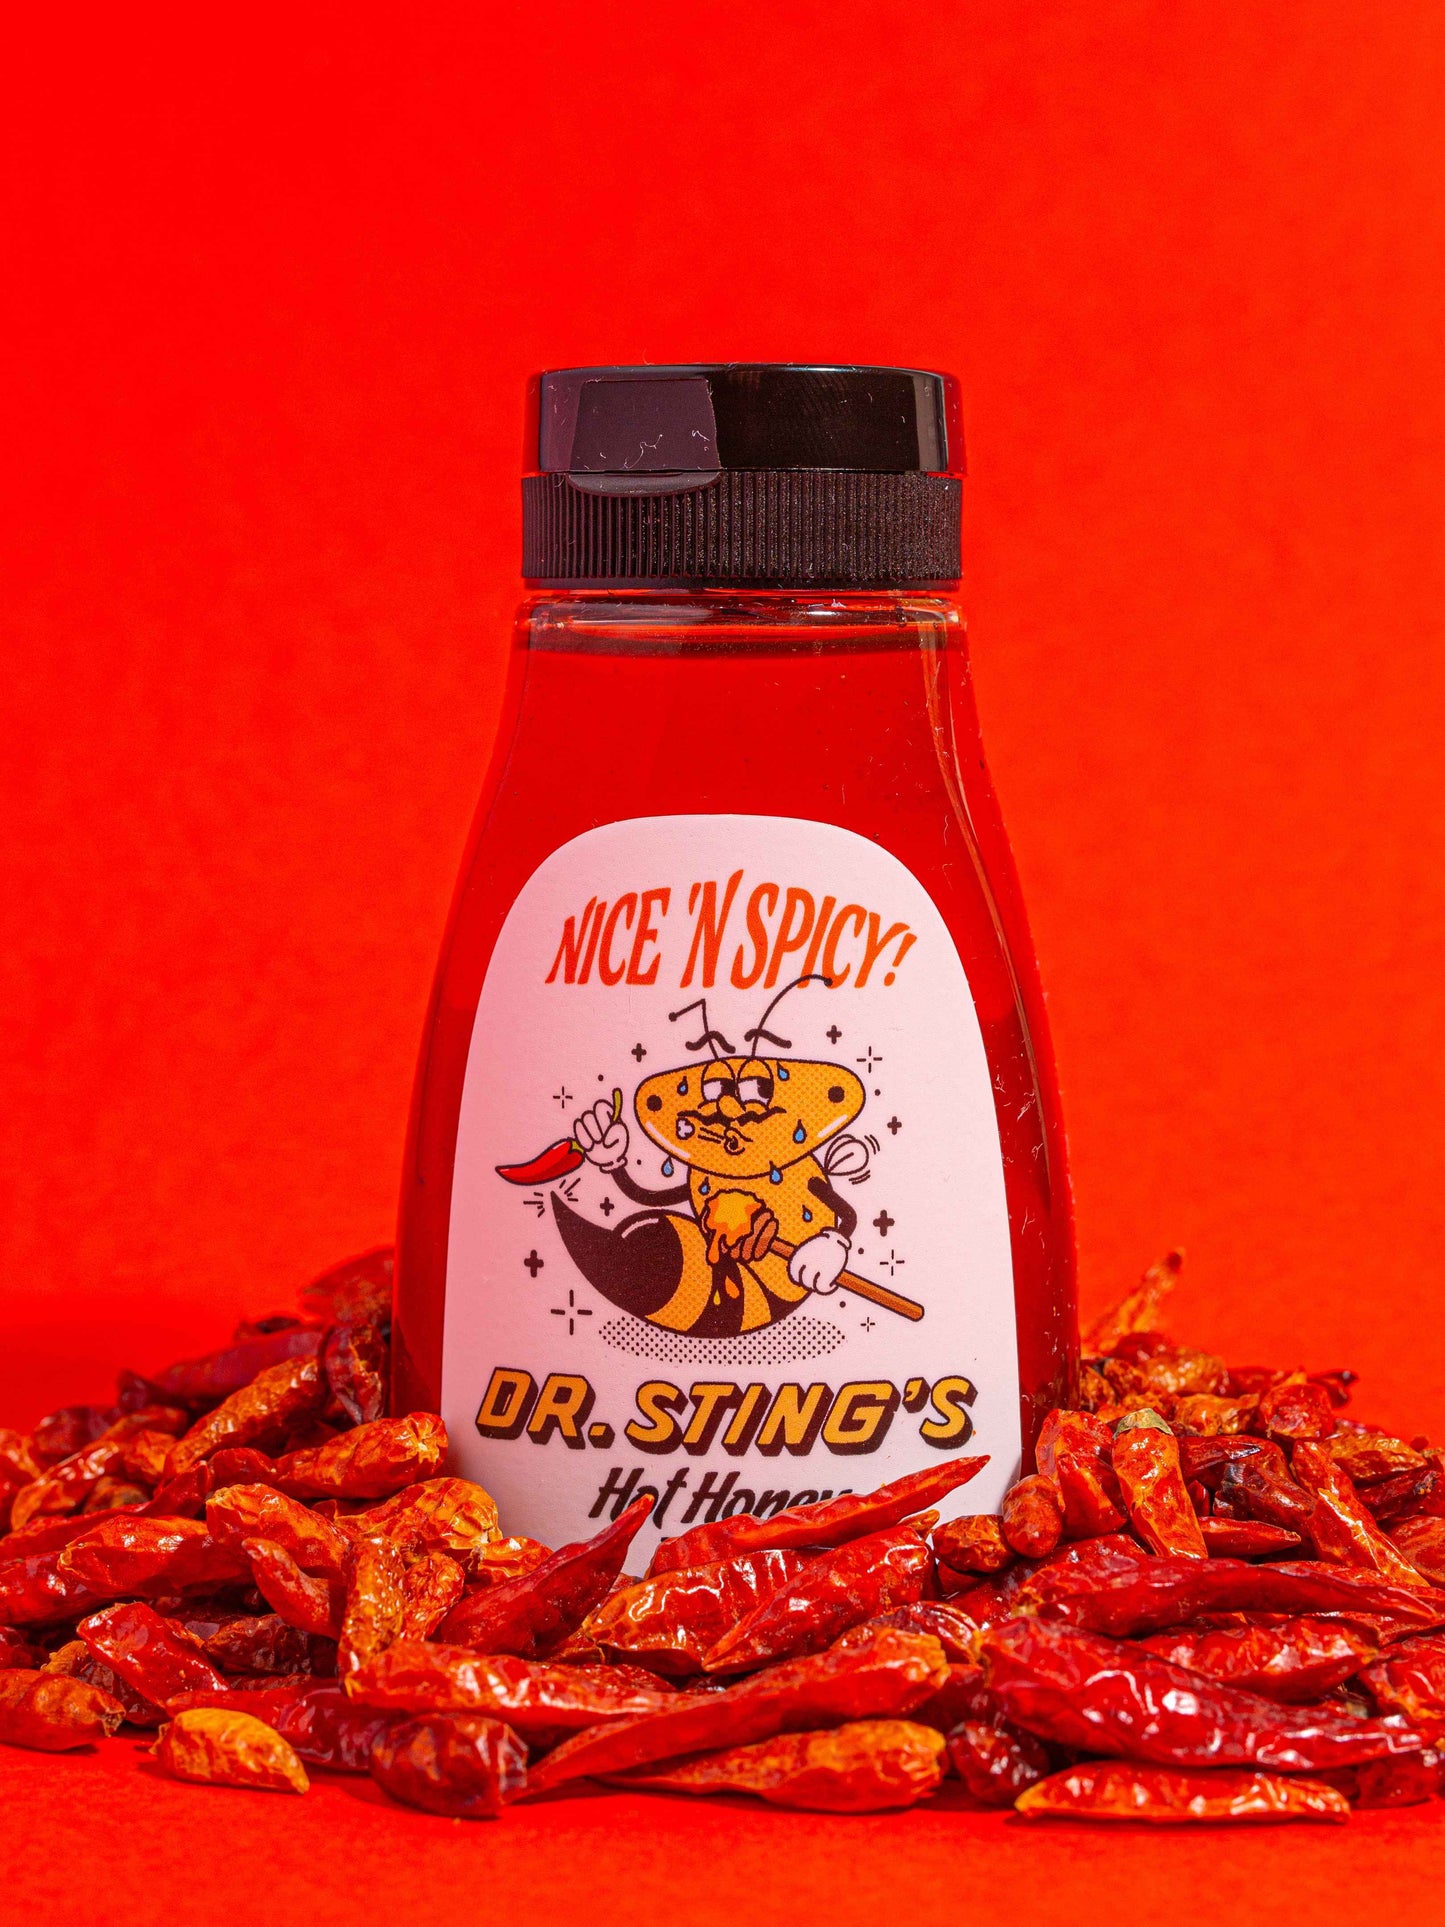 Dr. Sting's Hot Honey